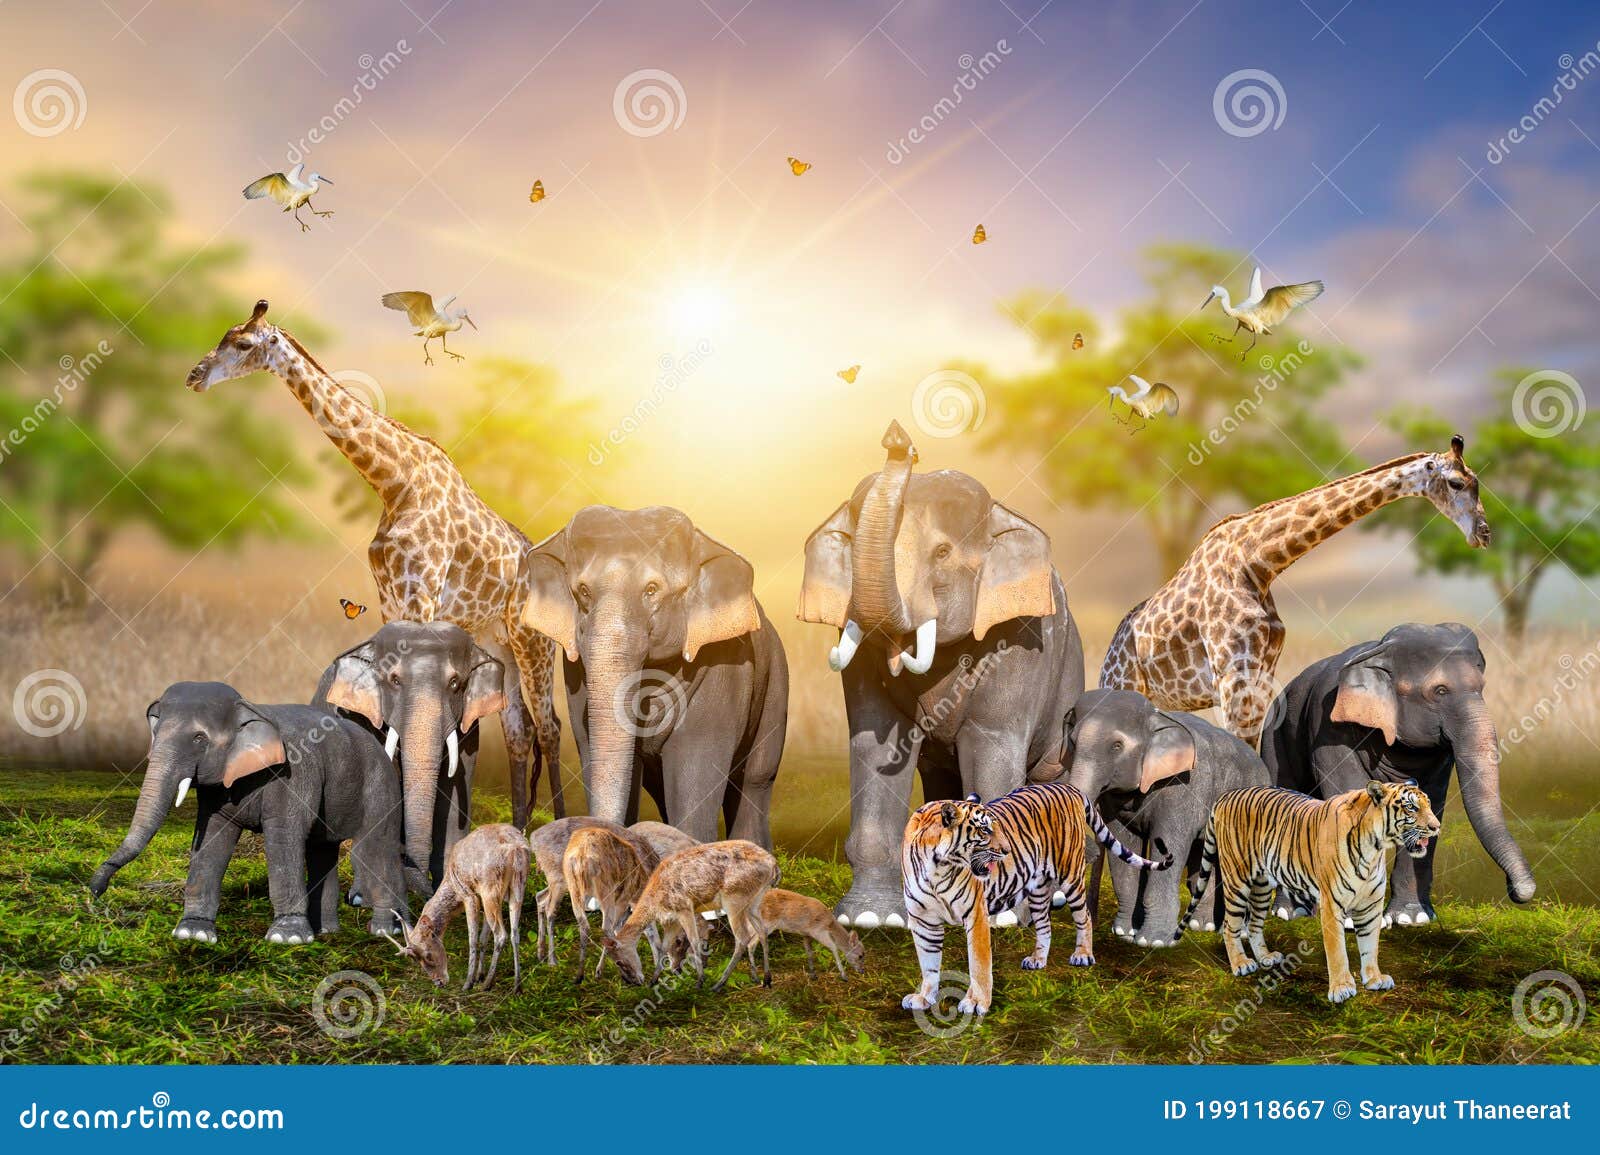 151,119 Safari Animals Stock Photos - Free & Royalty-Free Stock Photos from  Dreamstime